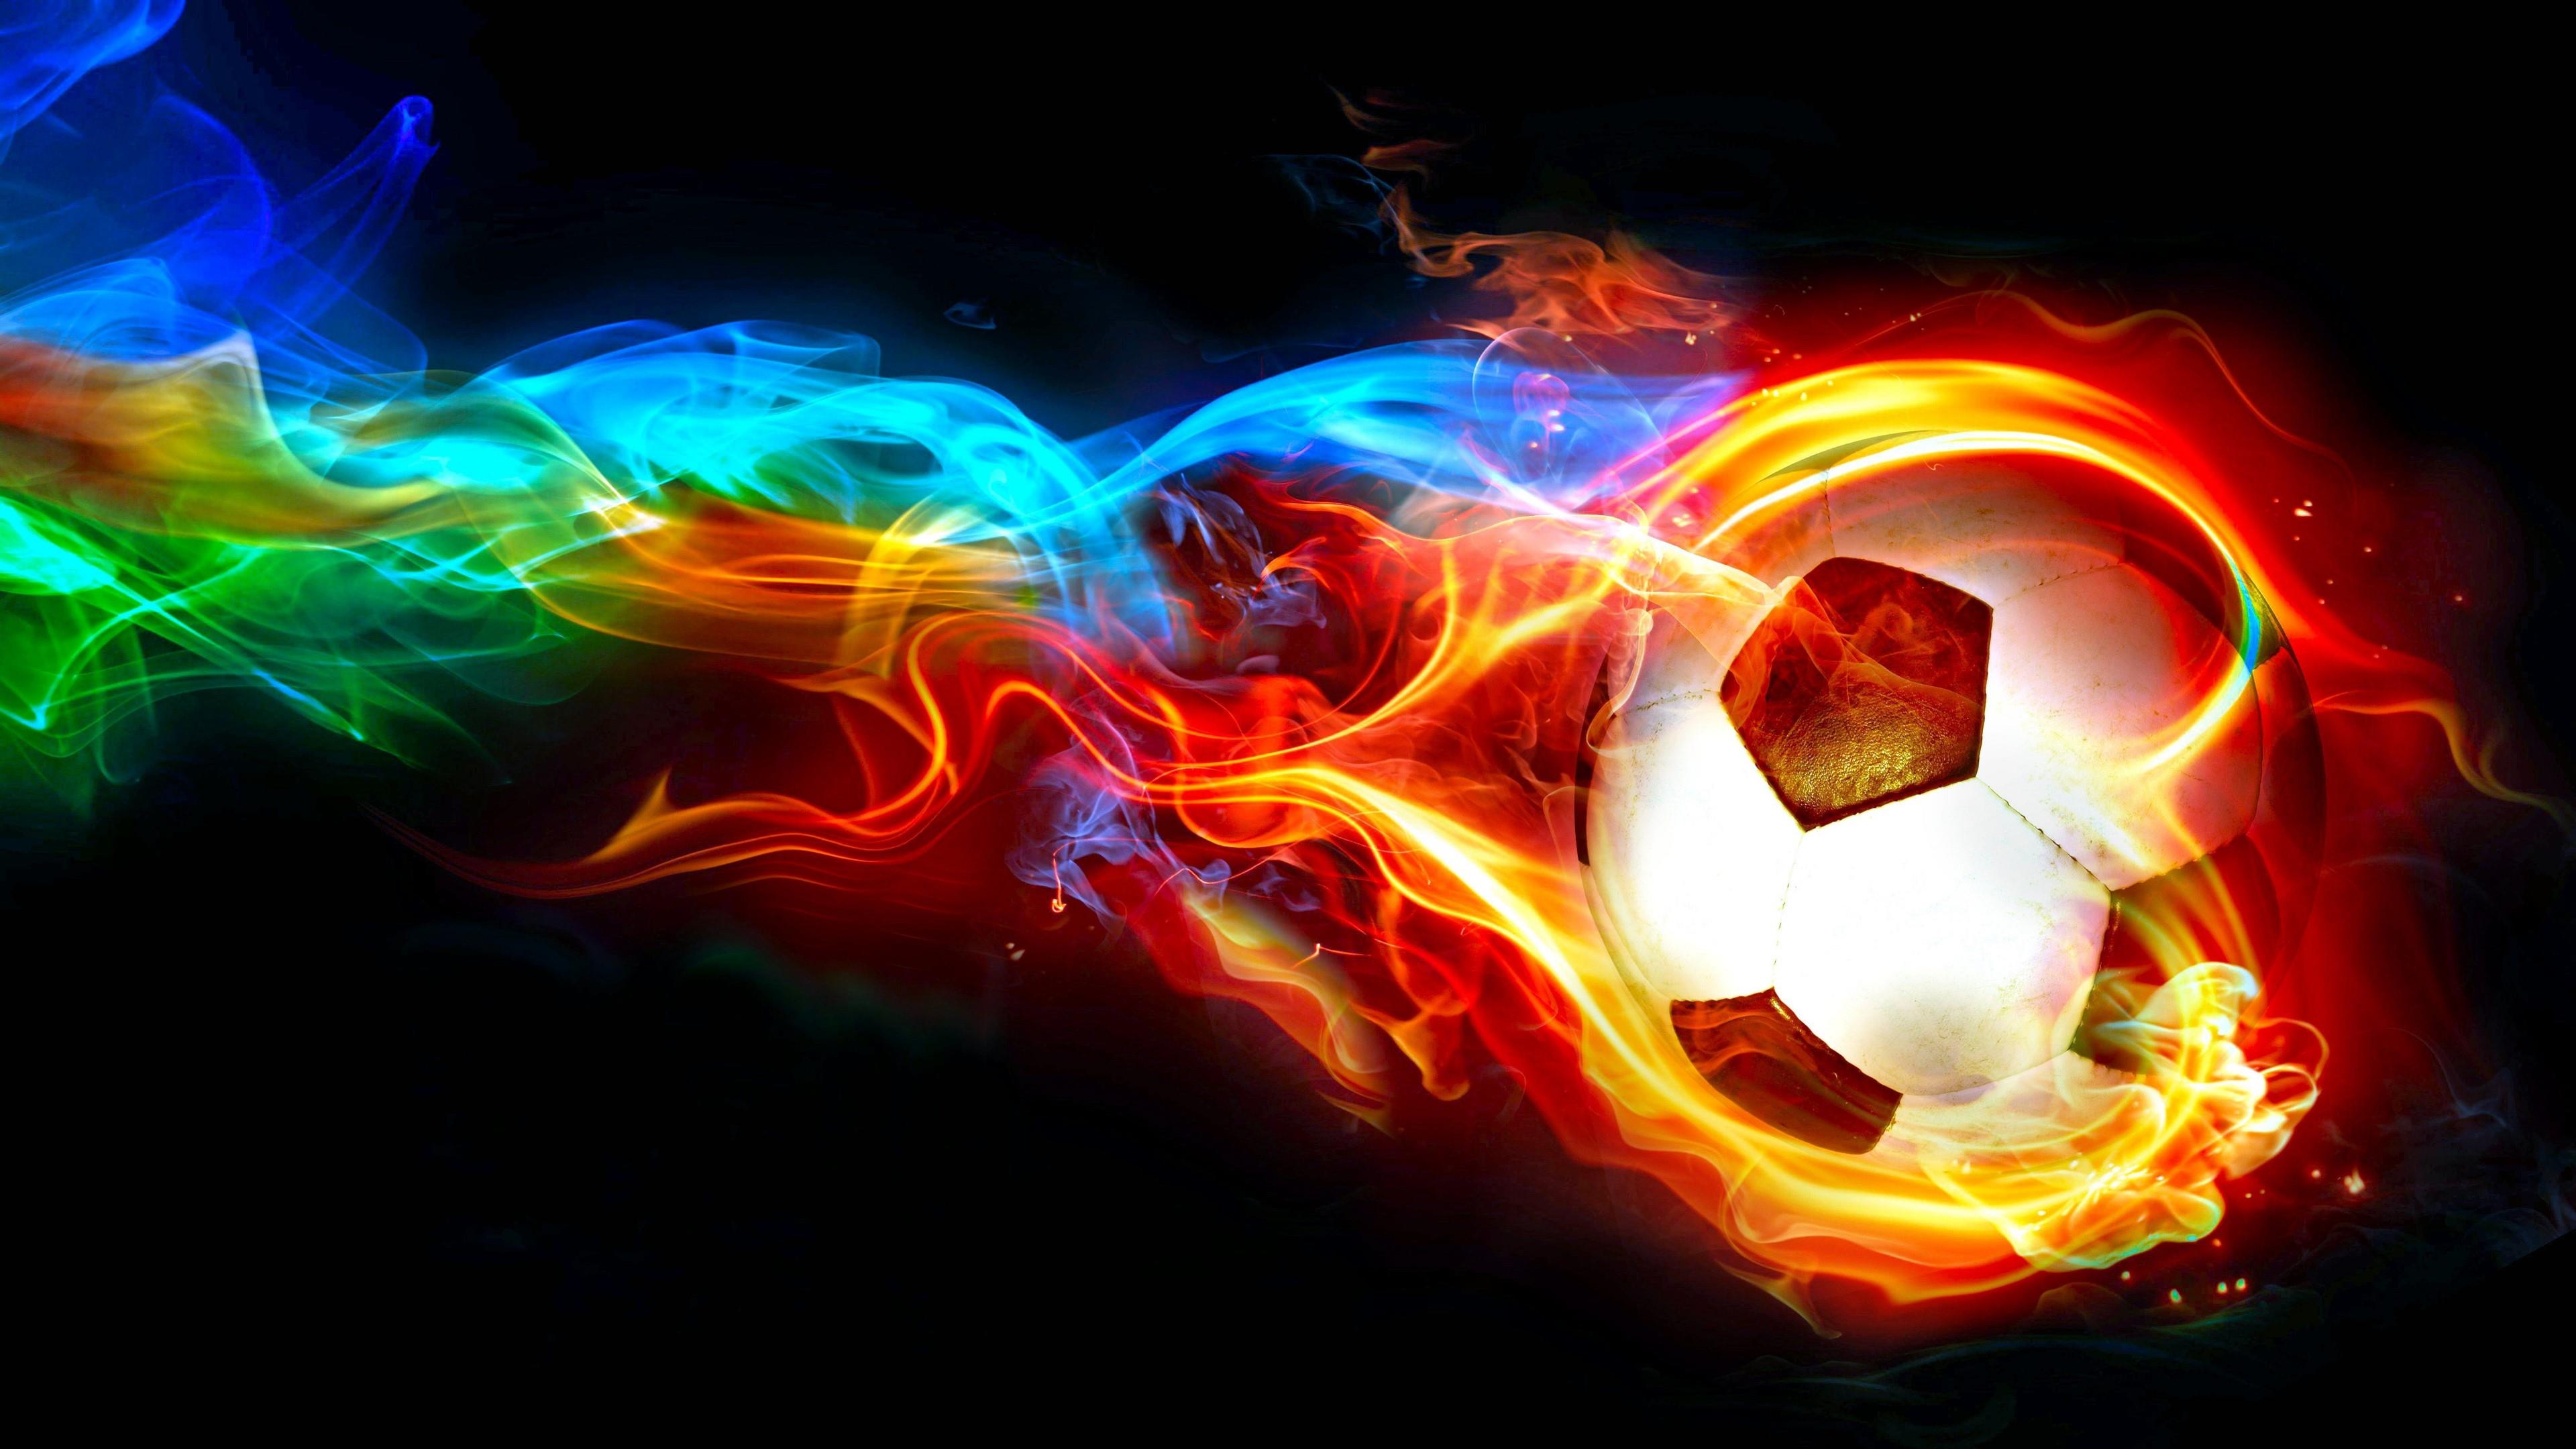 Soccer Ball On Fire Wallpaper